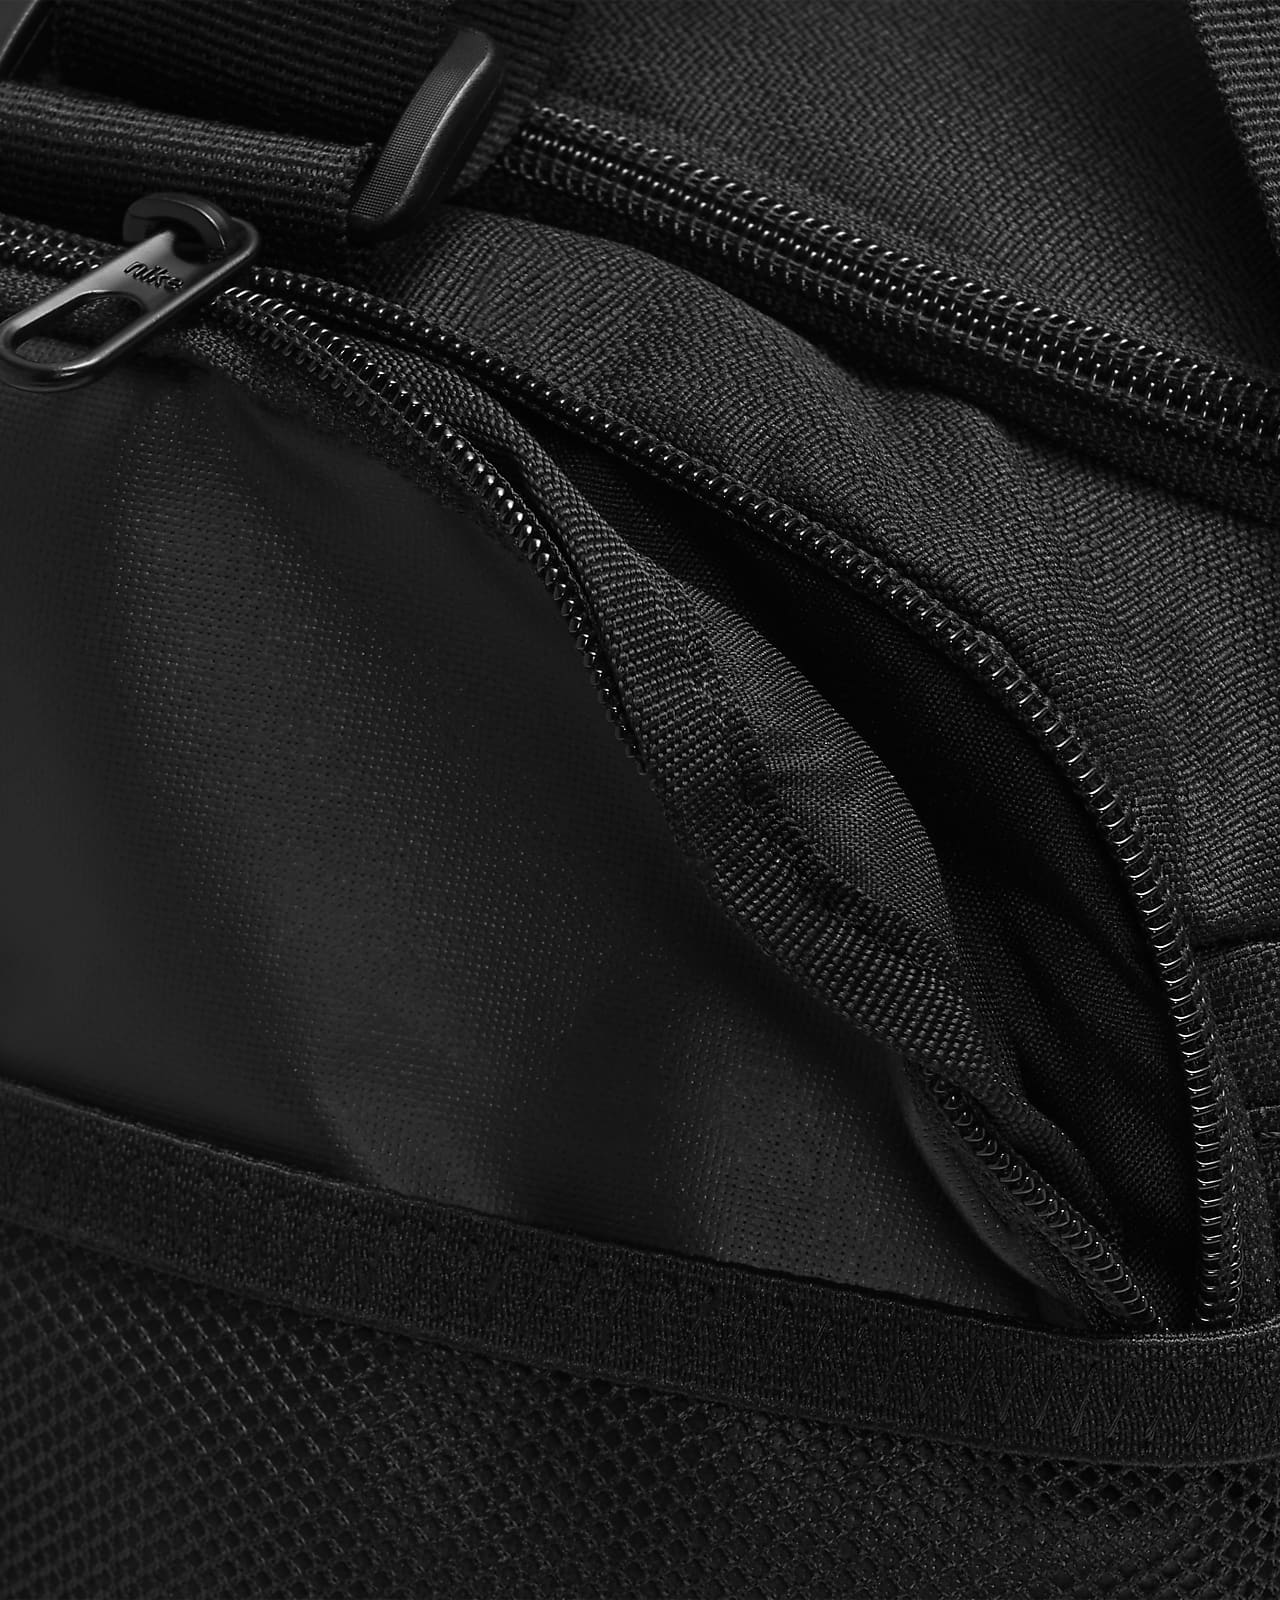 Nike Brasilia 9.5 Training Duffel Bag (Extra-Small, 25L). Nike PH